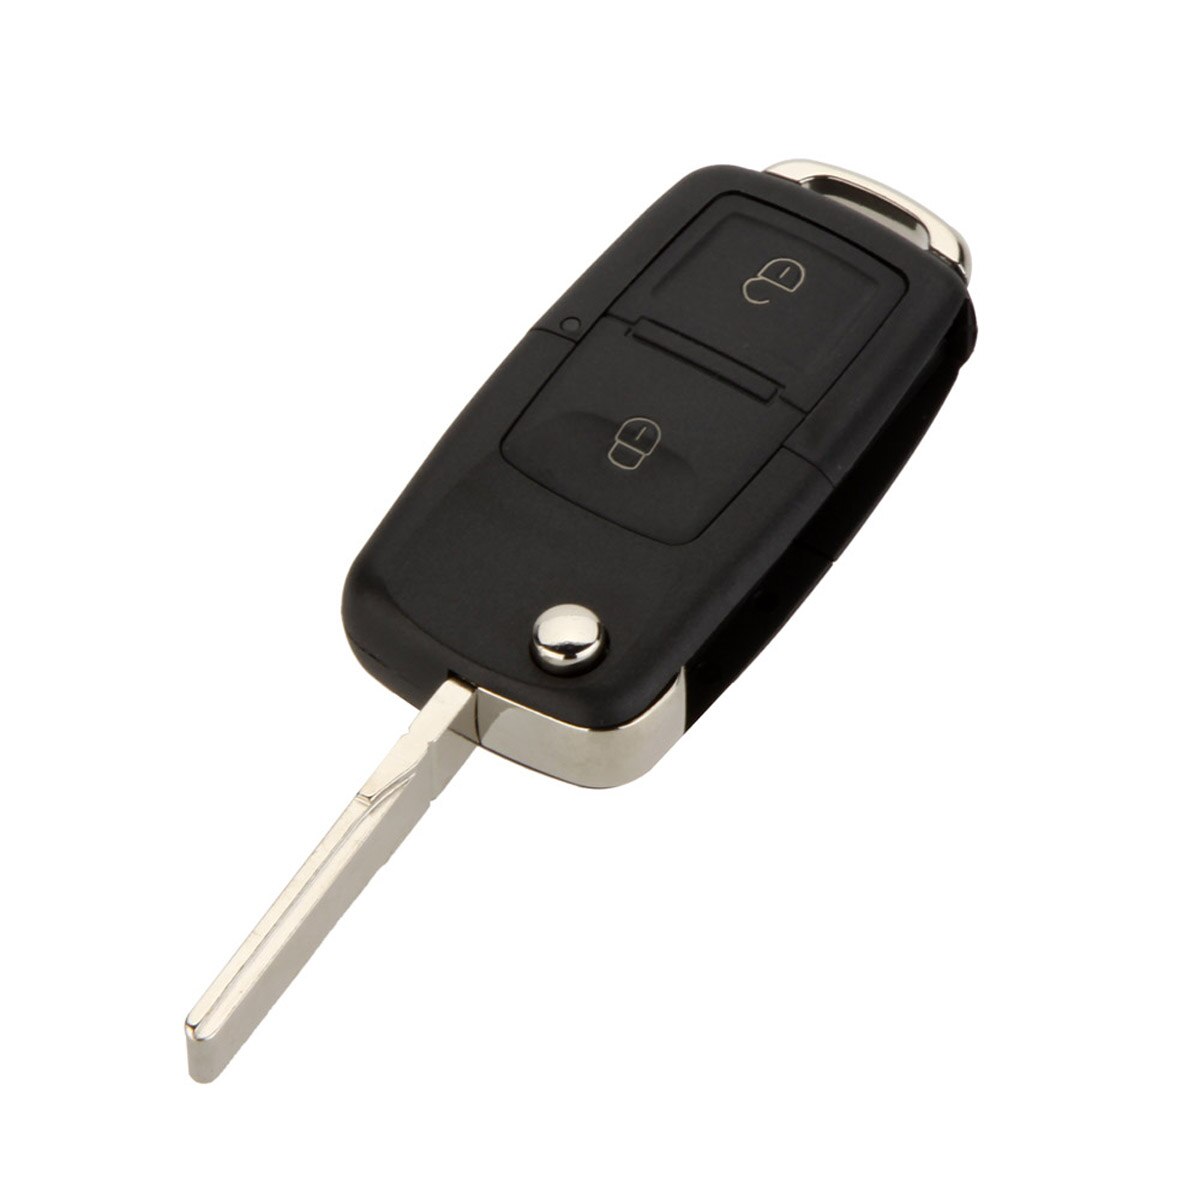 Vouwen Auto Flip Remote Key Shell Case 2 Knoppen Vervanging Case Fob Shell Voor Vw Volkswagen Alhambra MK4 T5 Polo golf Etc